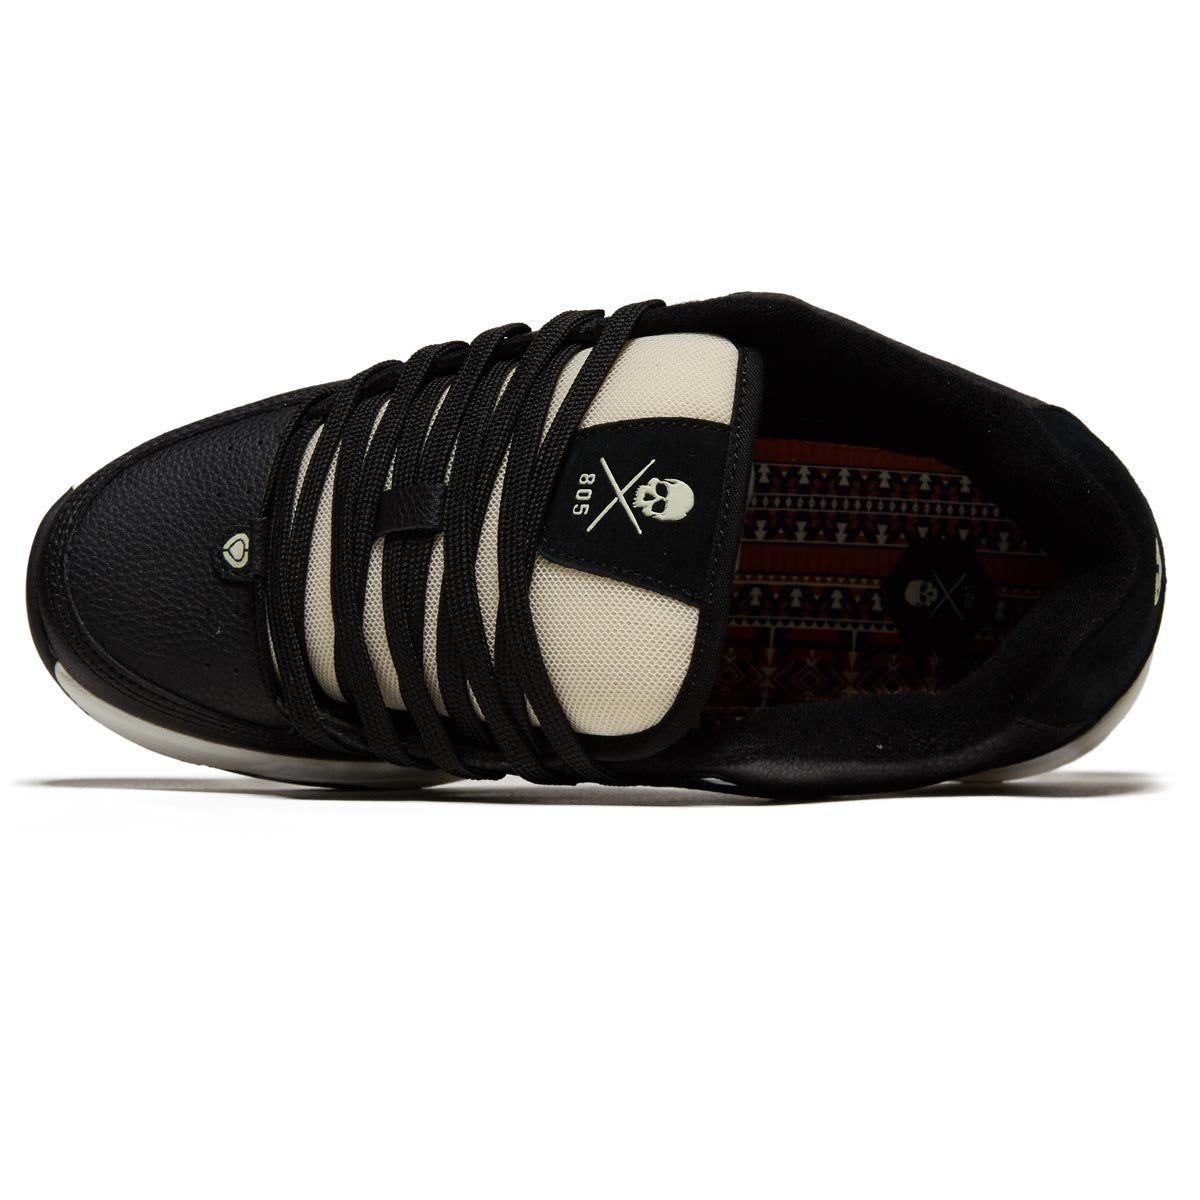 C1rca 805 Shoes - Black/Navajo image 3